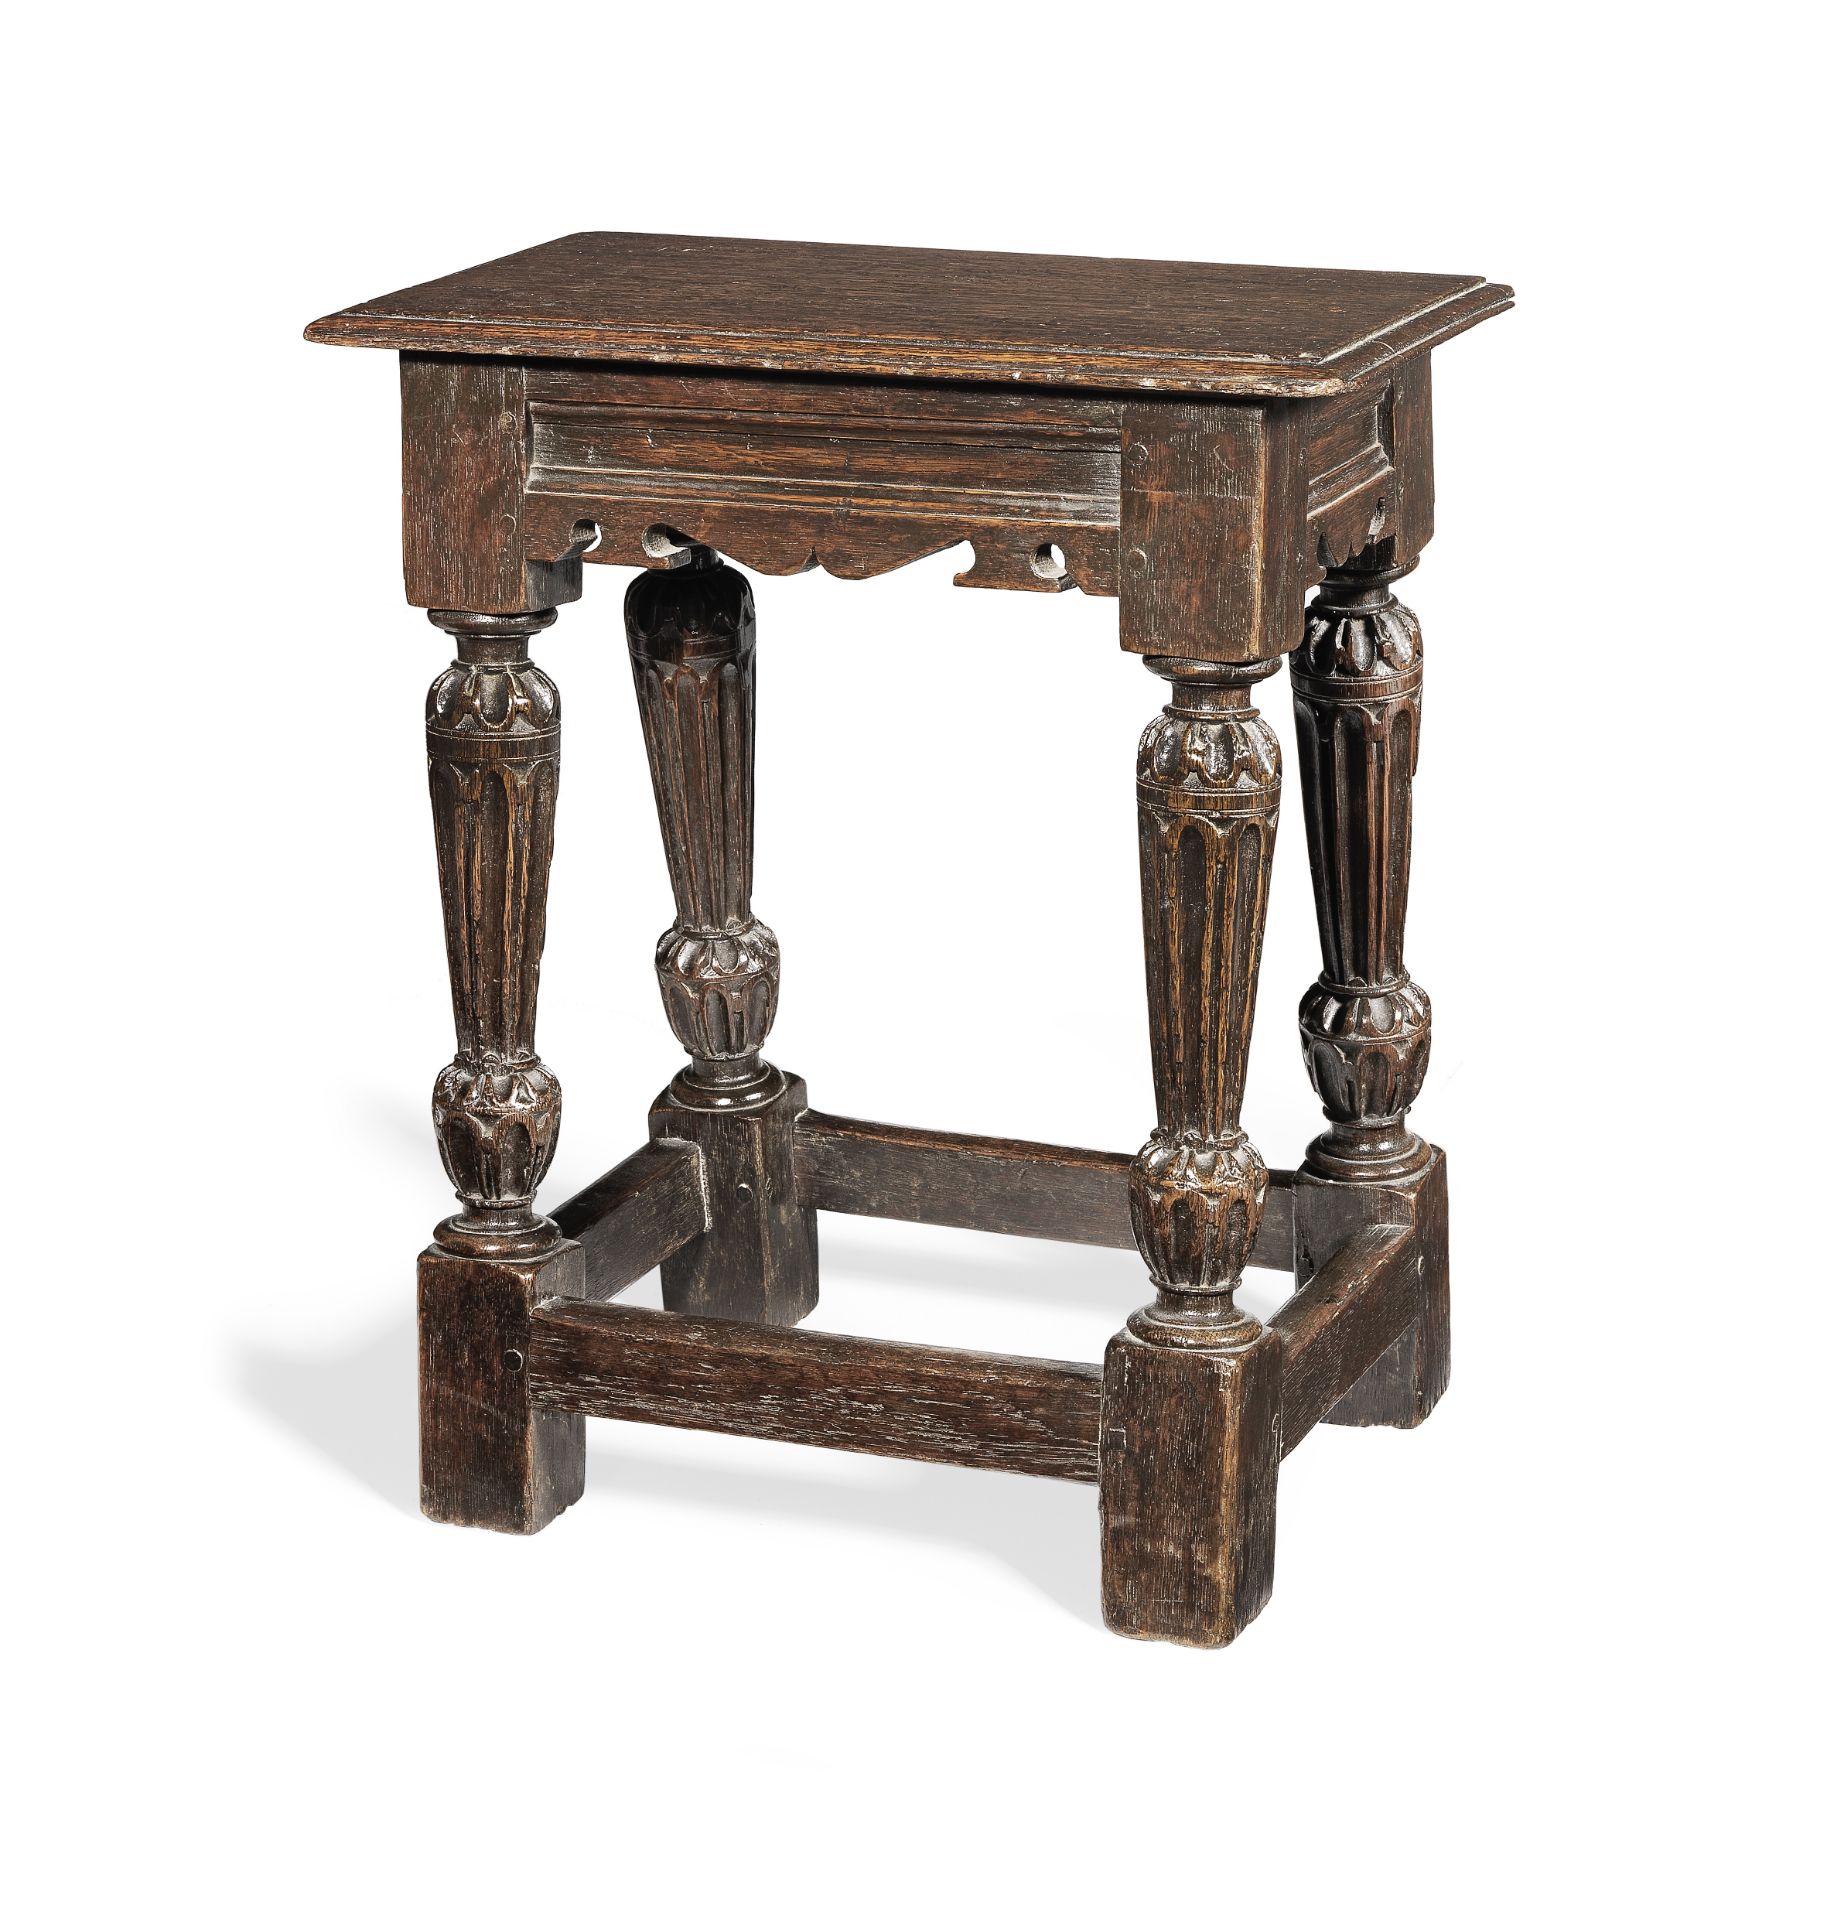 A rare Elizabeth I oak joint stool, circa 1590